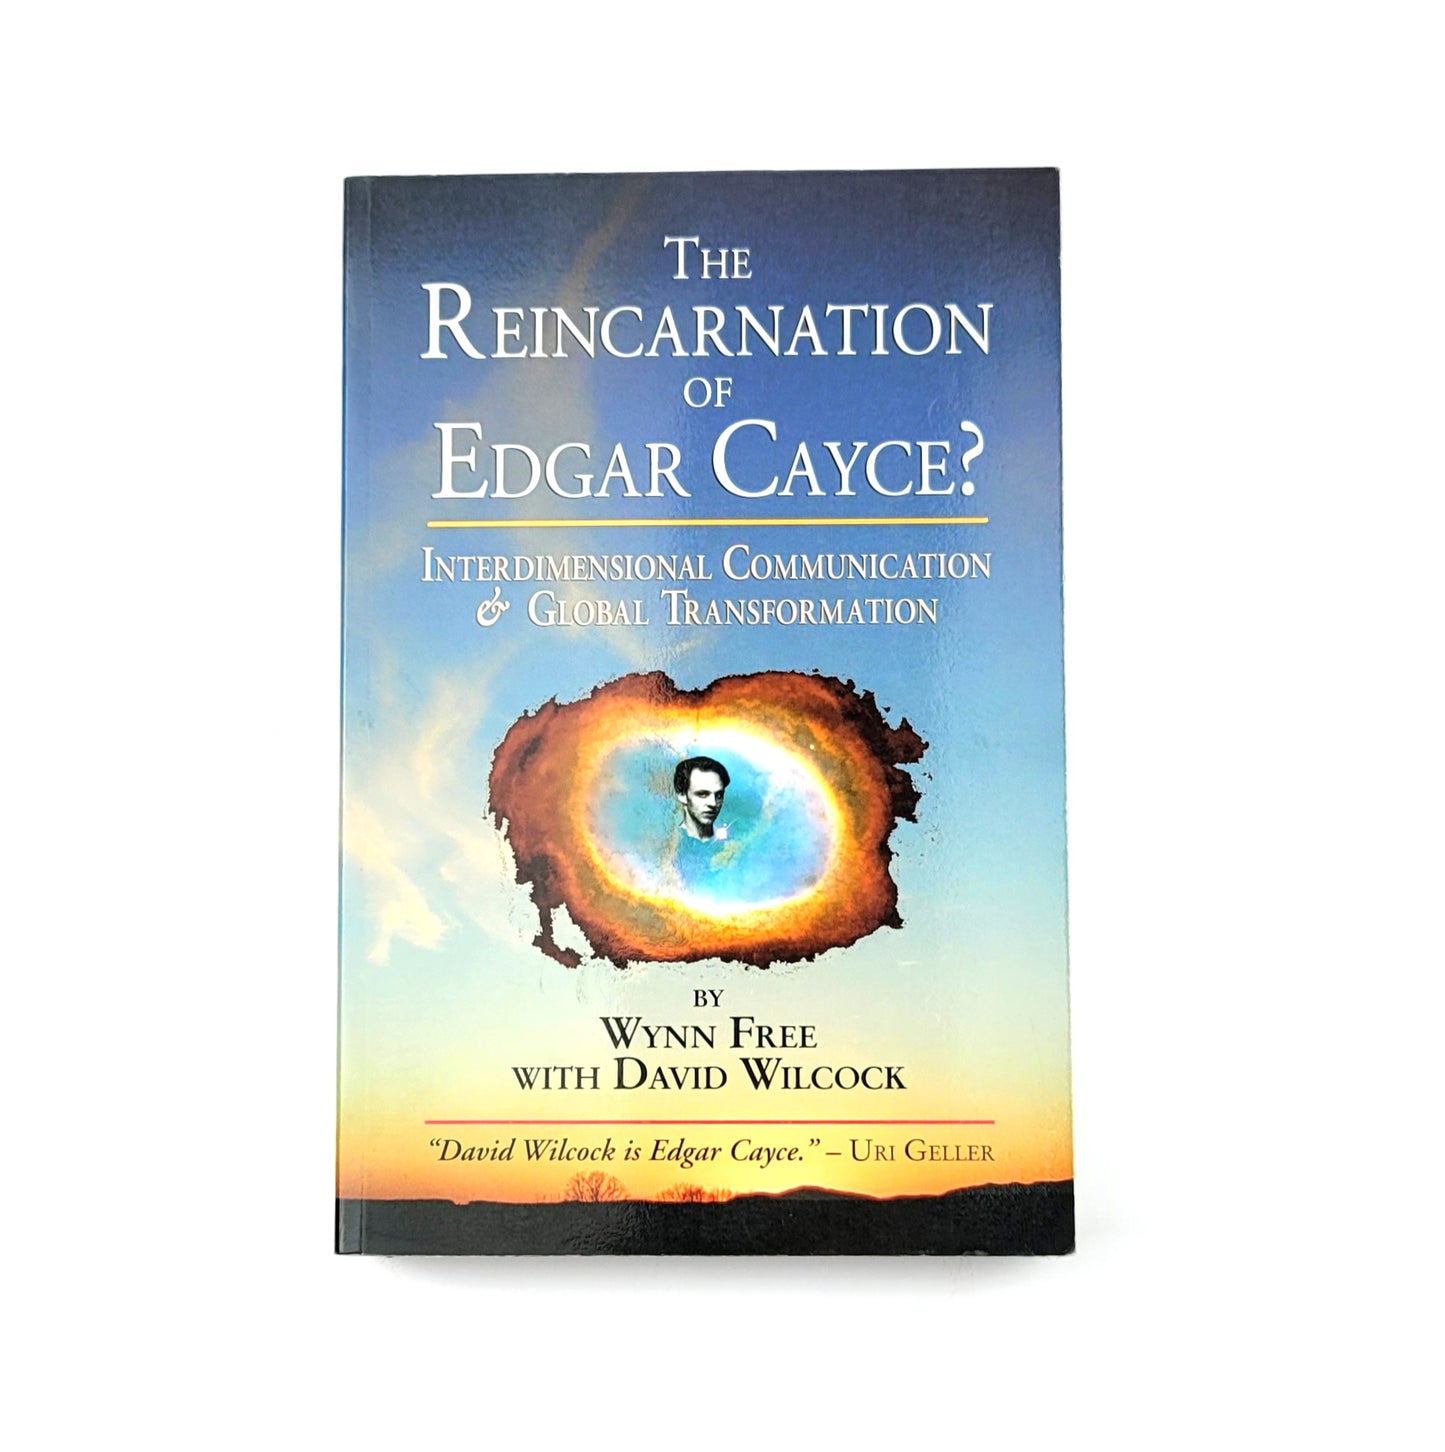 The Reincarnation of Edgar Cayce?: Interdimensional Communication and Global Transformation by Wynn Free